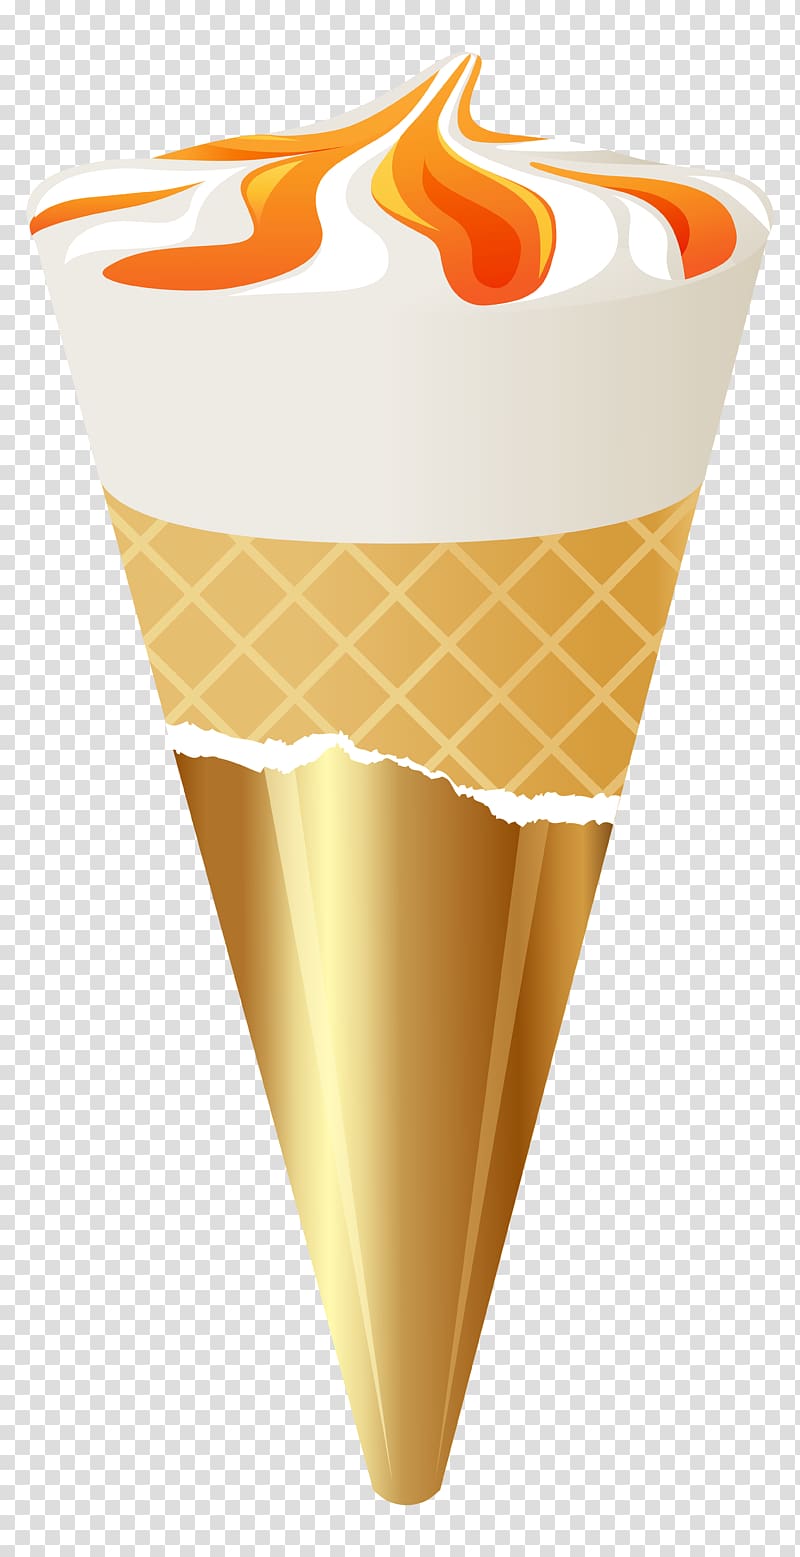 ice cream , Ice cream cone Sundae Strawberry ice cream, Ice Cream Cone transparent background PNG clipart